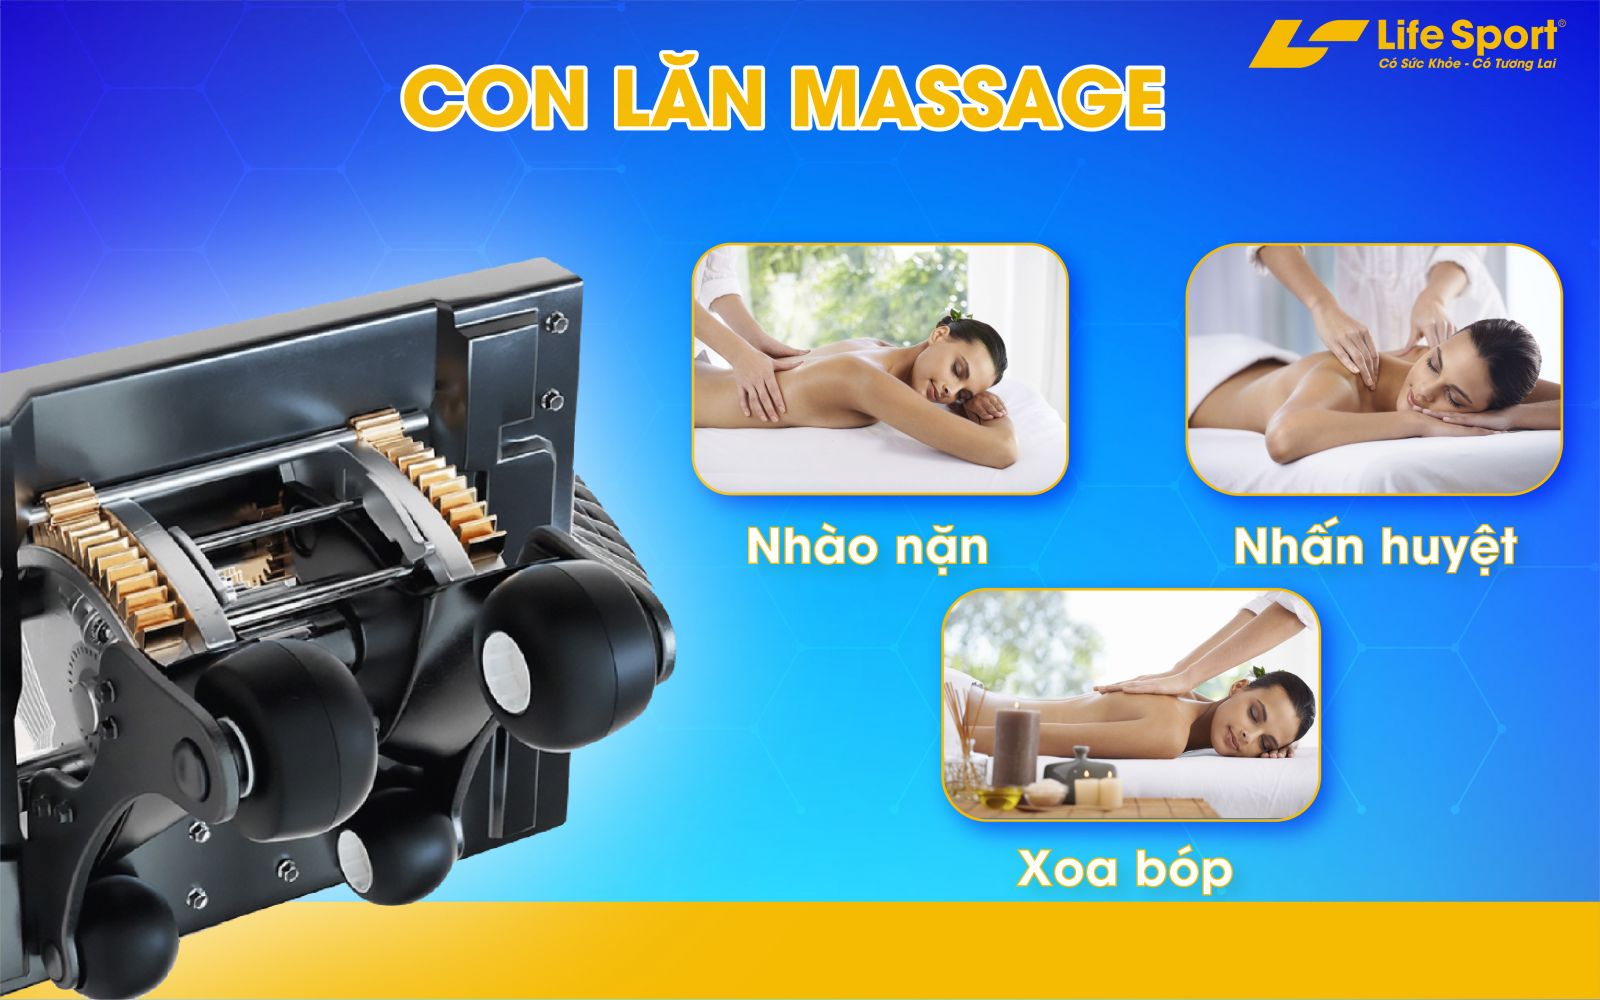 so-sanh-ghe-massage-lifesport-voi-cac-san-pham-khac-tren-thi-truong